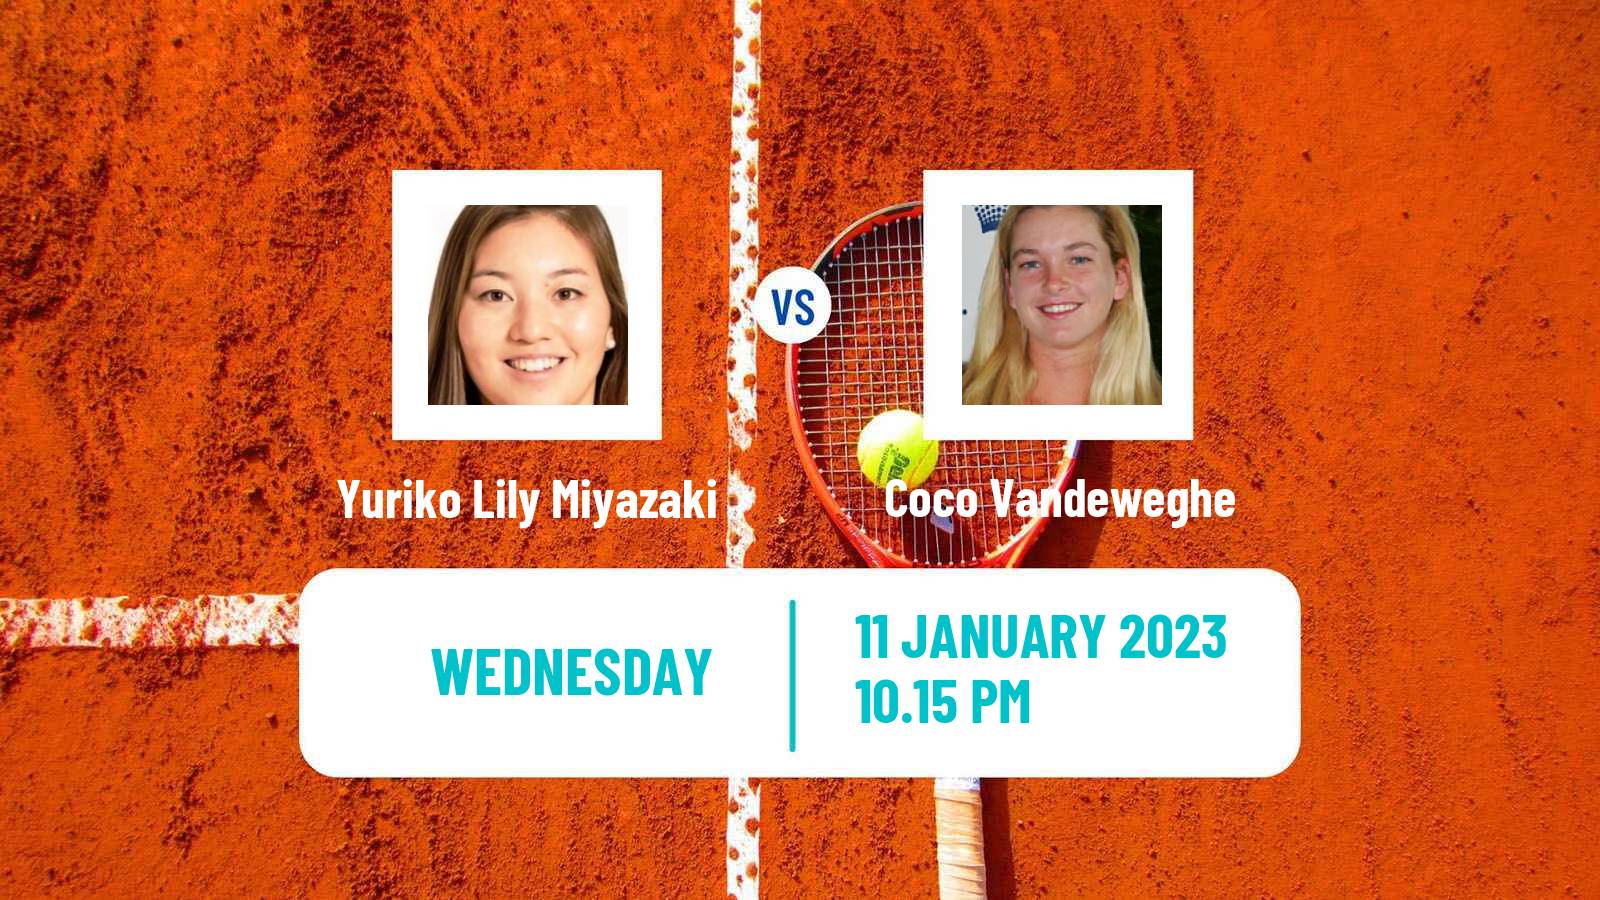 Tennis WTA Australian Open Yuriko Lily Miyazaki - Coco Vandeweghe